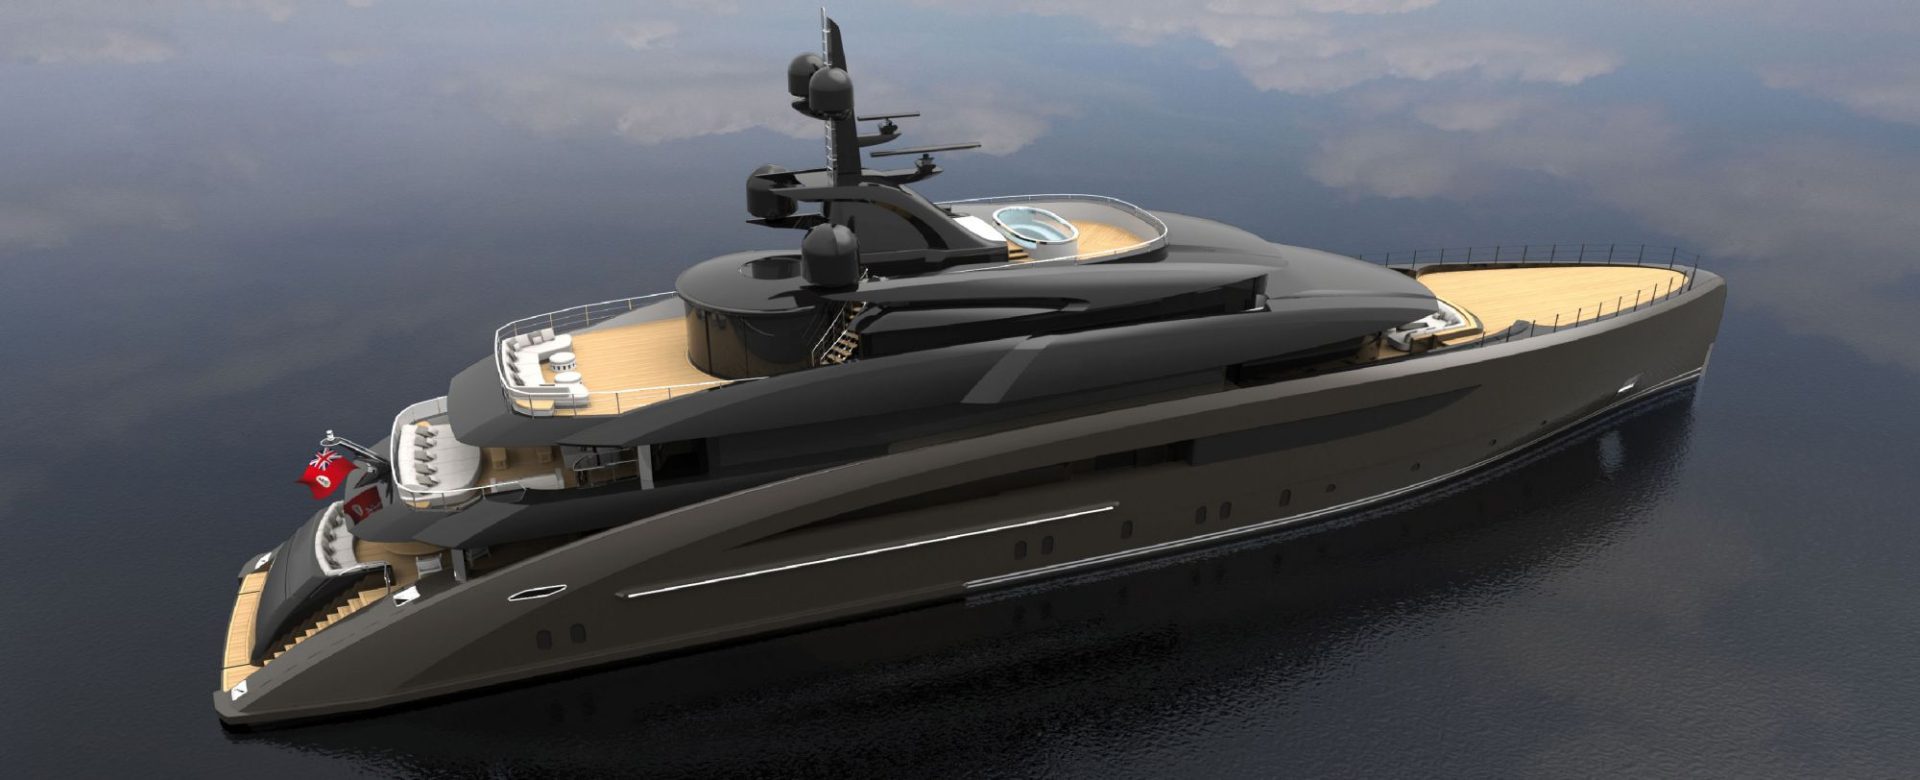 new era yachts alameda